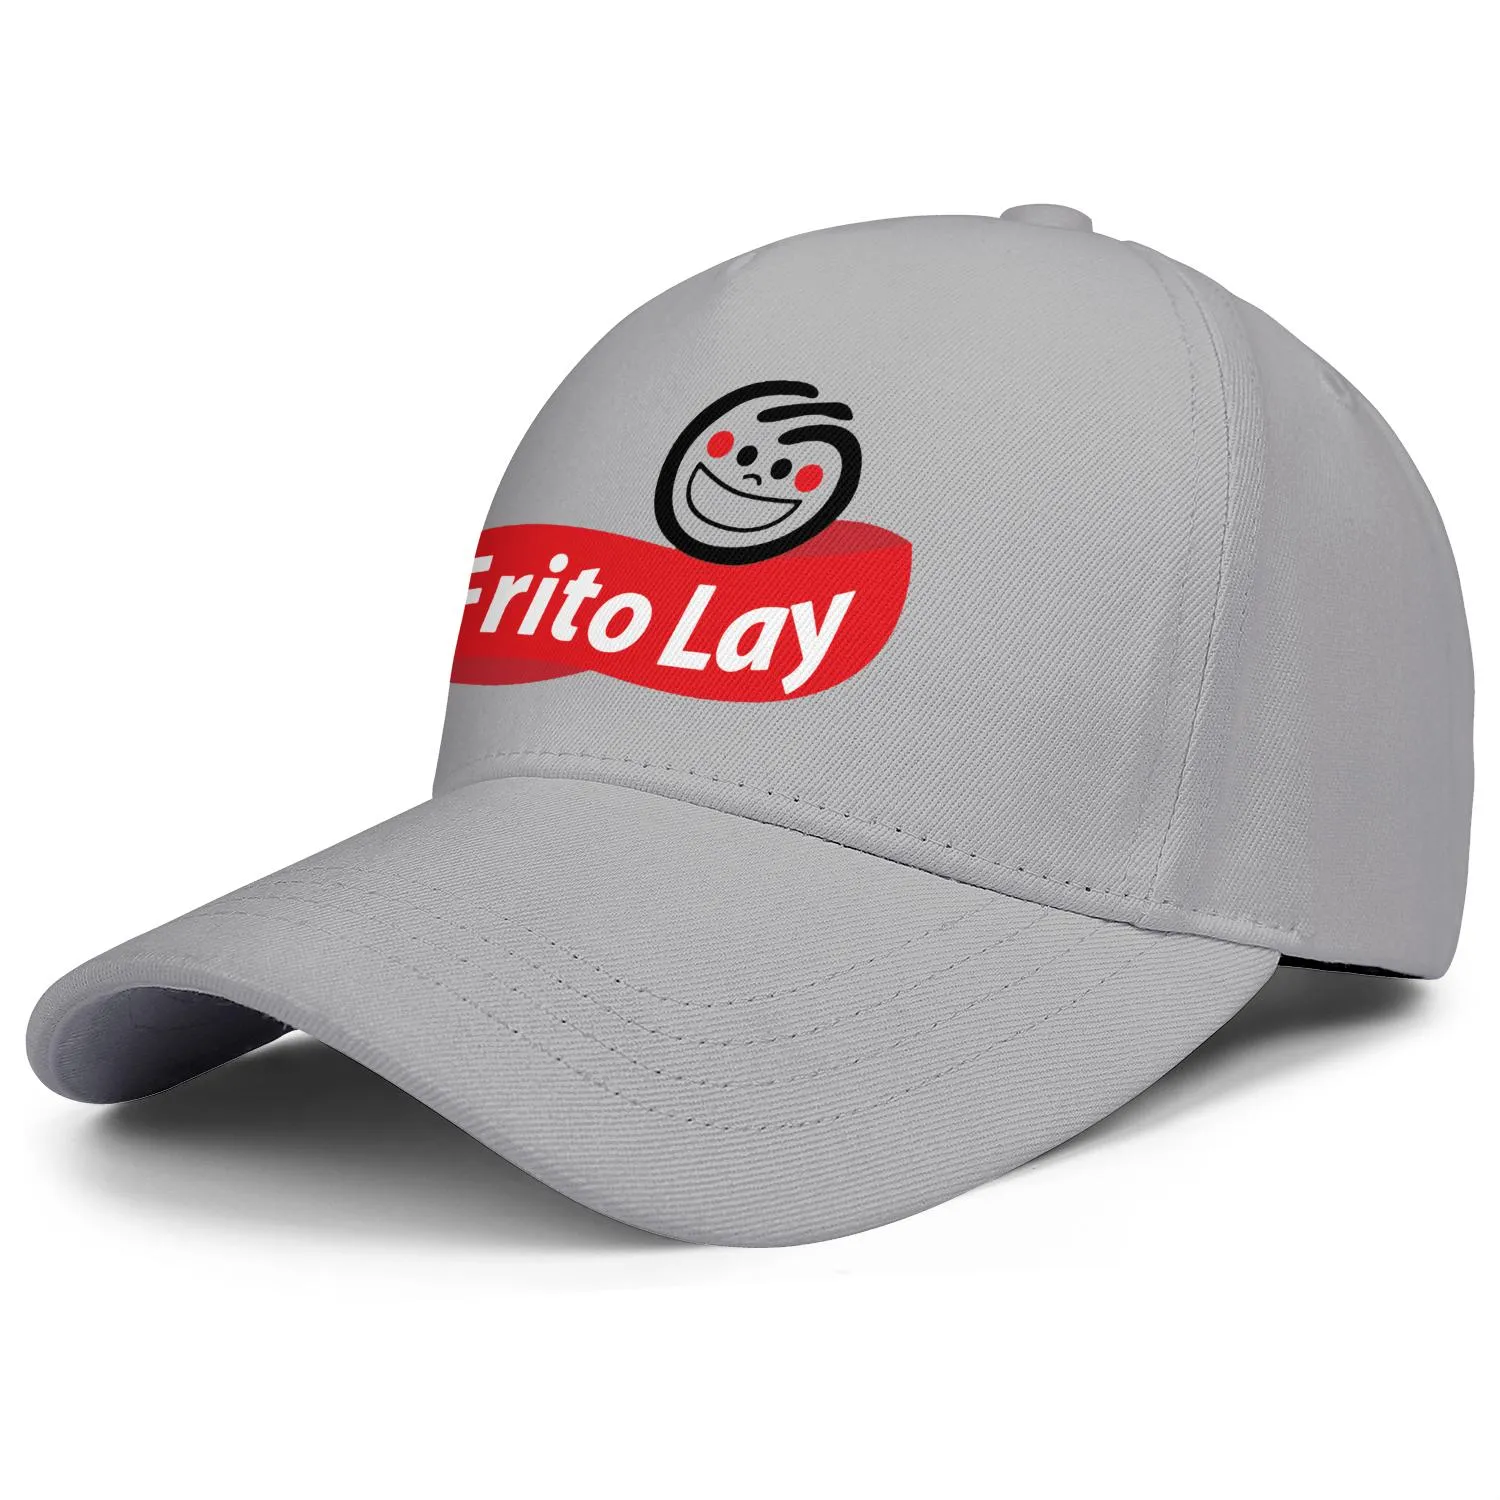 Fritos-Lays mens and womens adjustable trucker cap design blank personalized trendy baseballhats logo Frito-Lay Potato Chips Frito226y